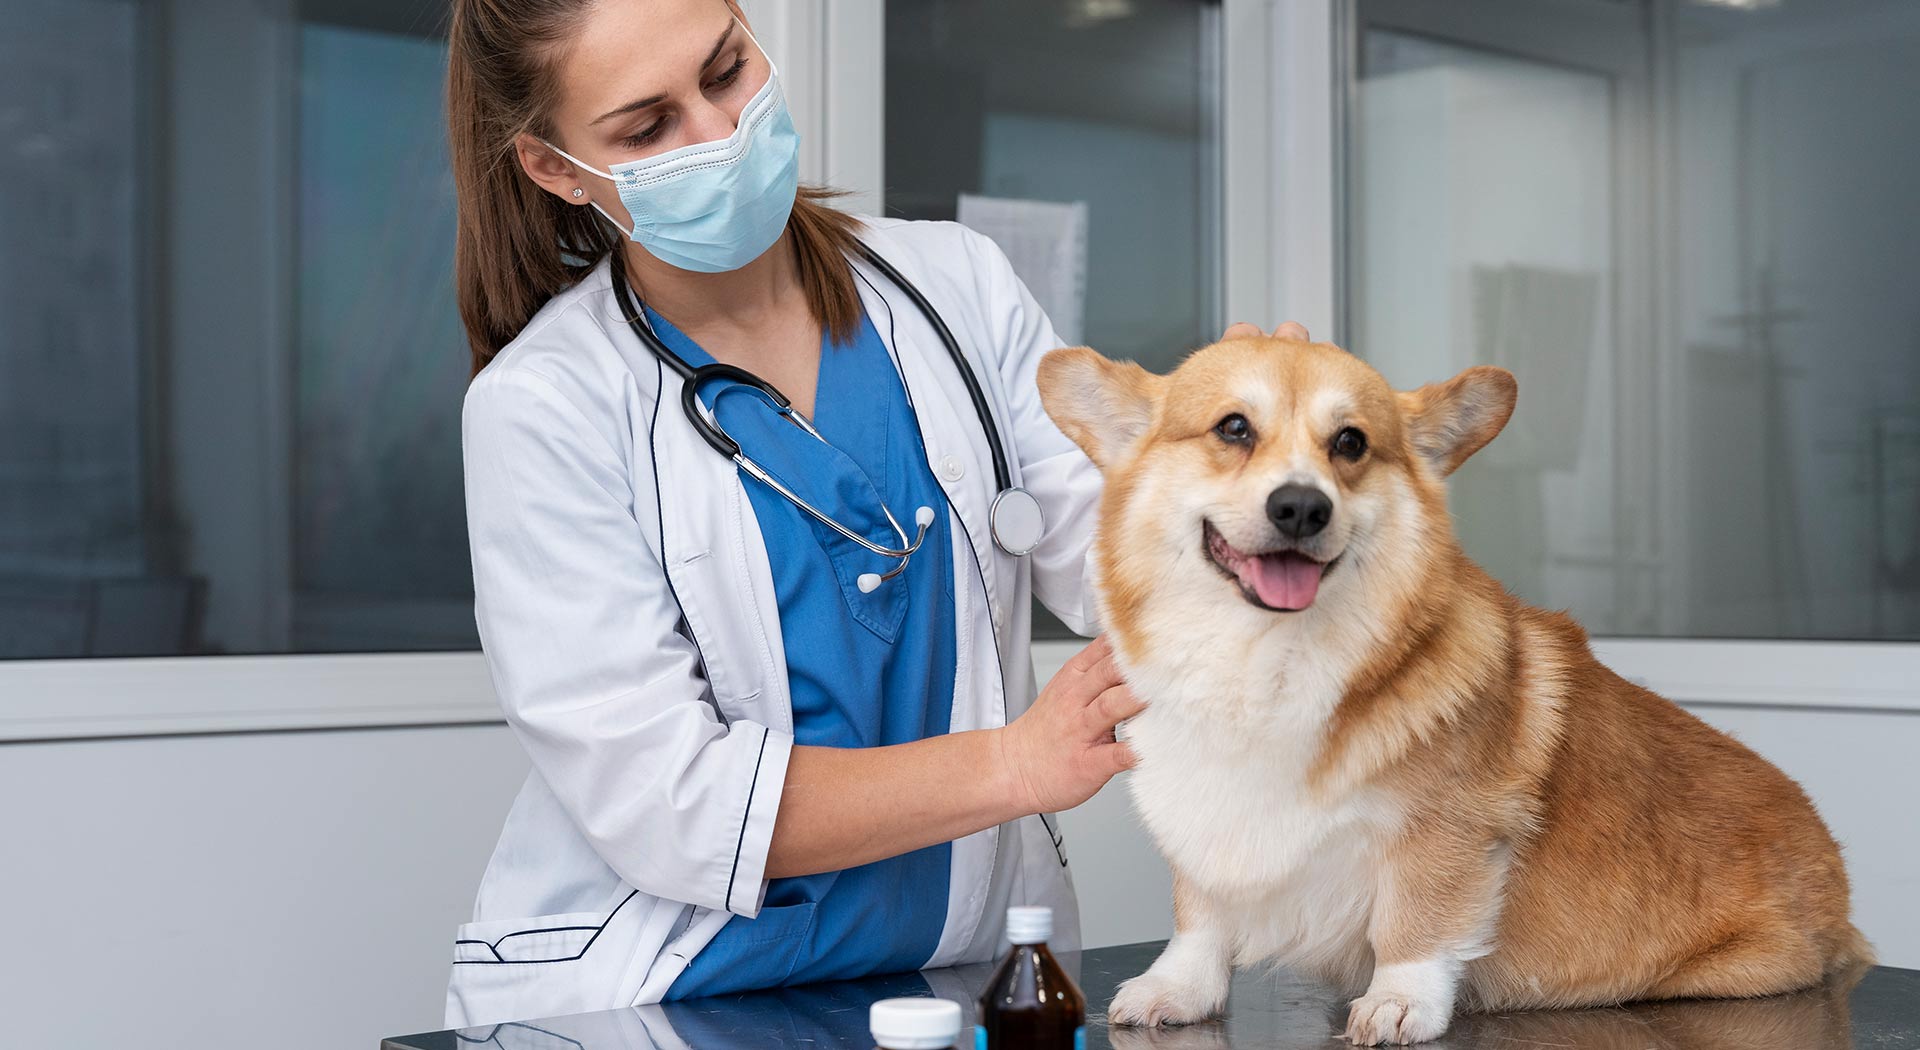 The Finest in Veterinary Care